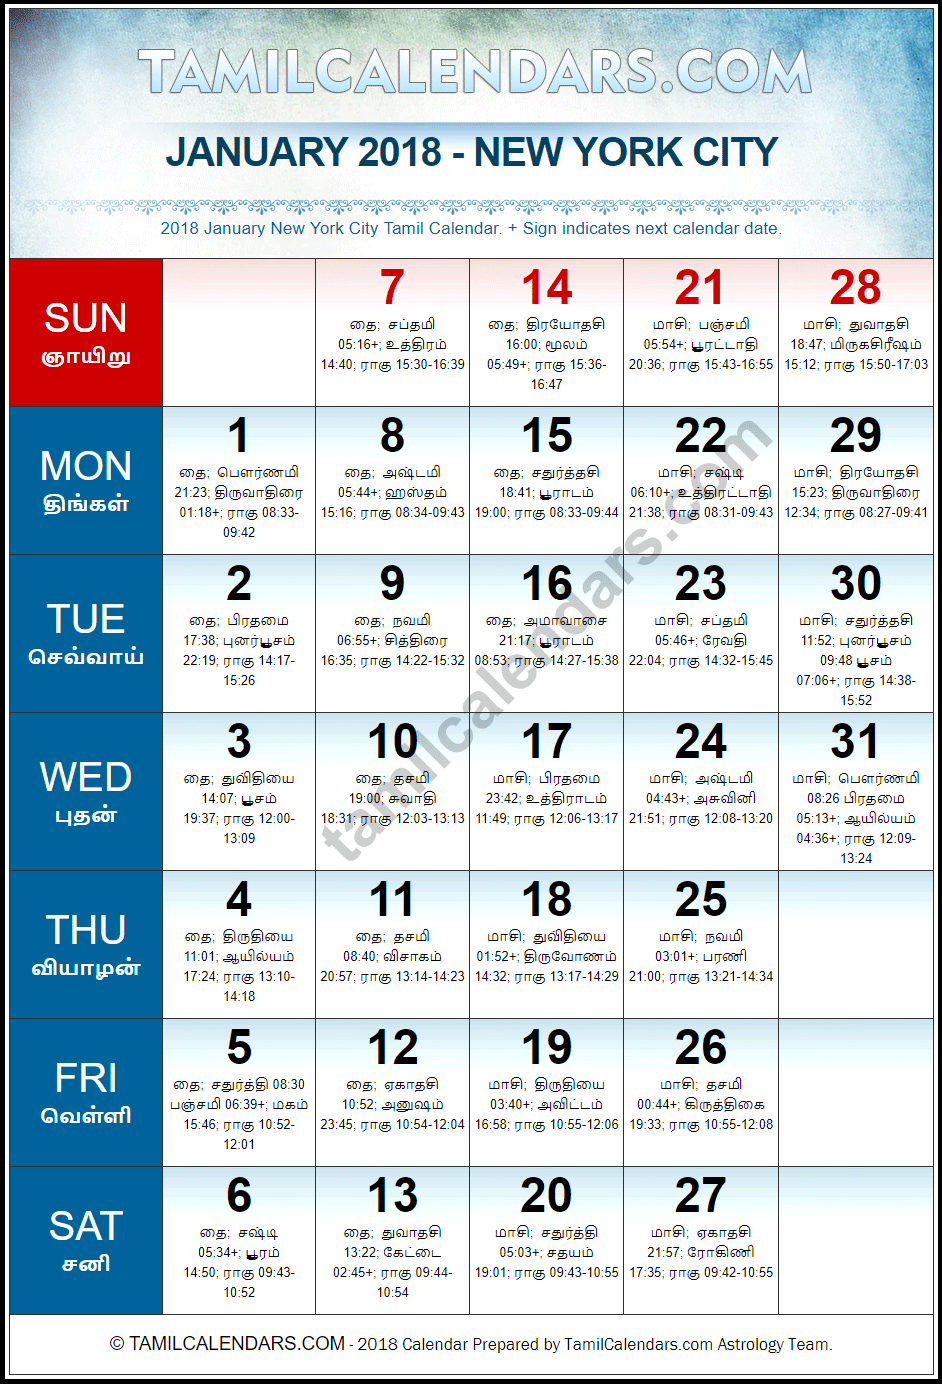 January 2018 Tamil Calendar for New York, USA